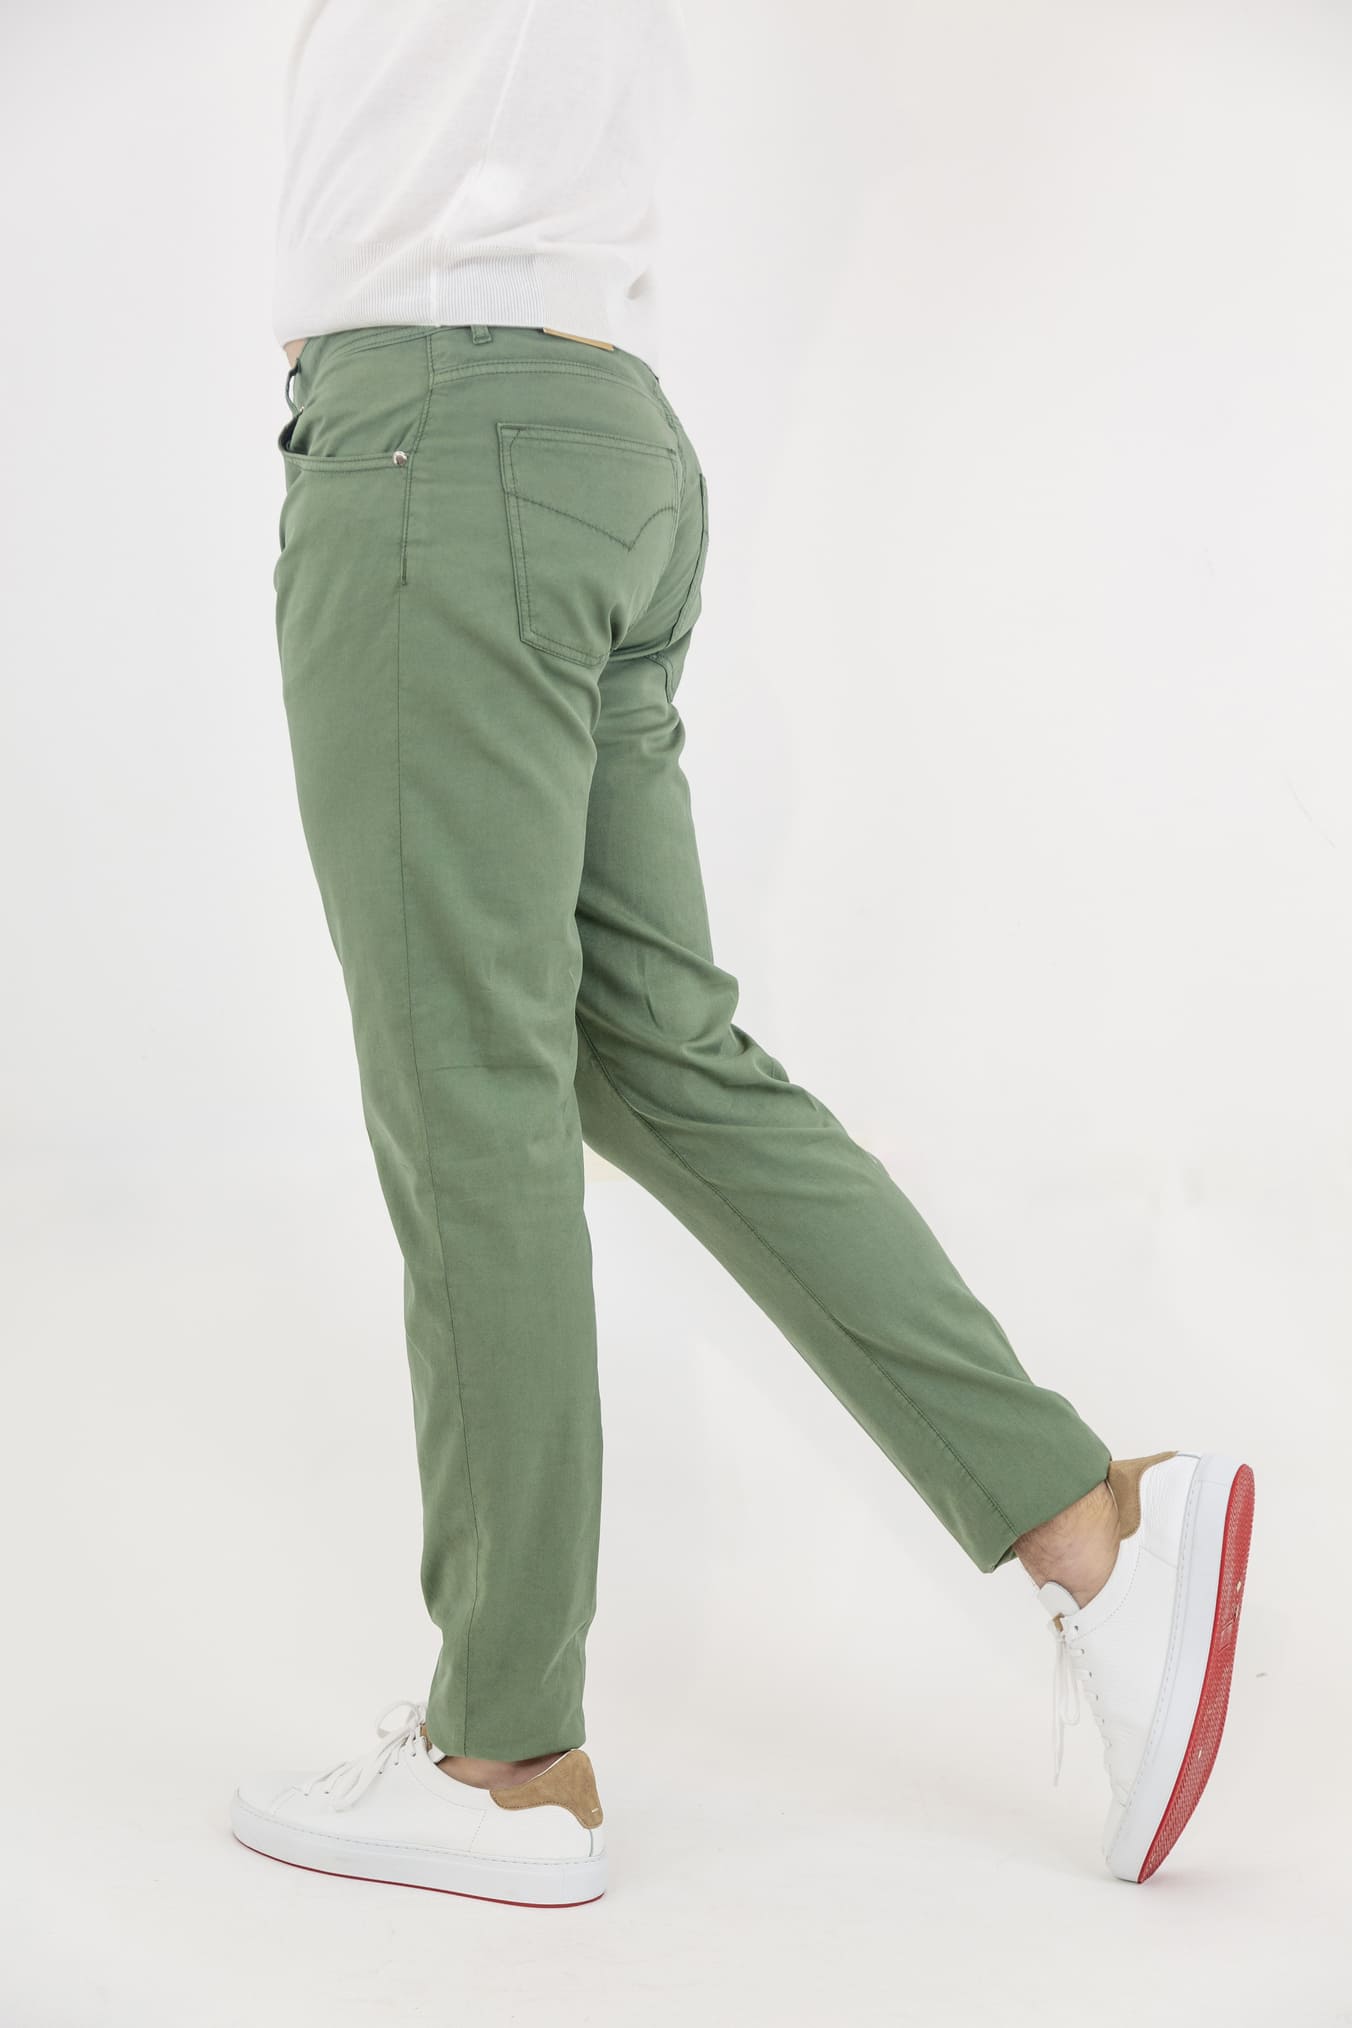 PESCAROLO Pantaloni 5 Tasche mod. Nerano Cotone Seta Verdi